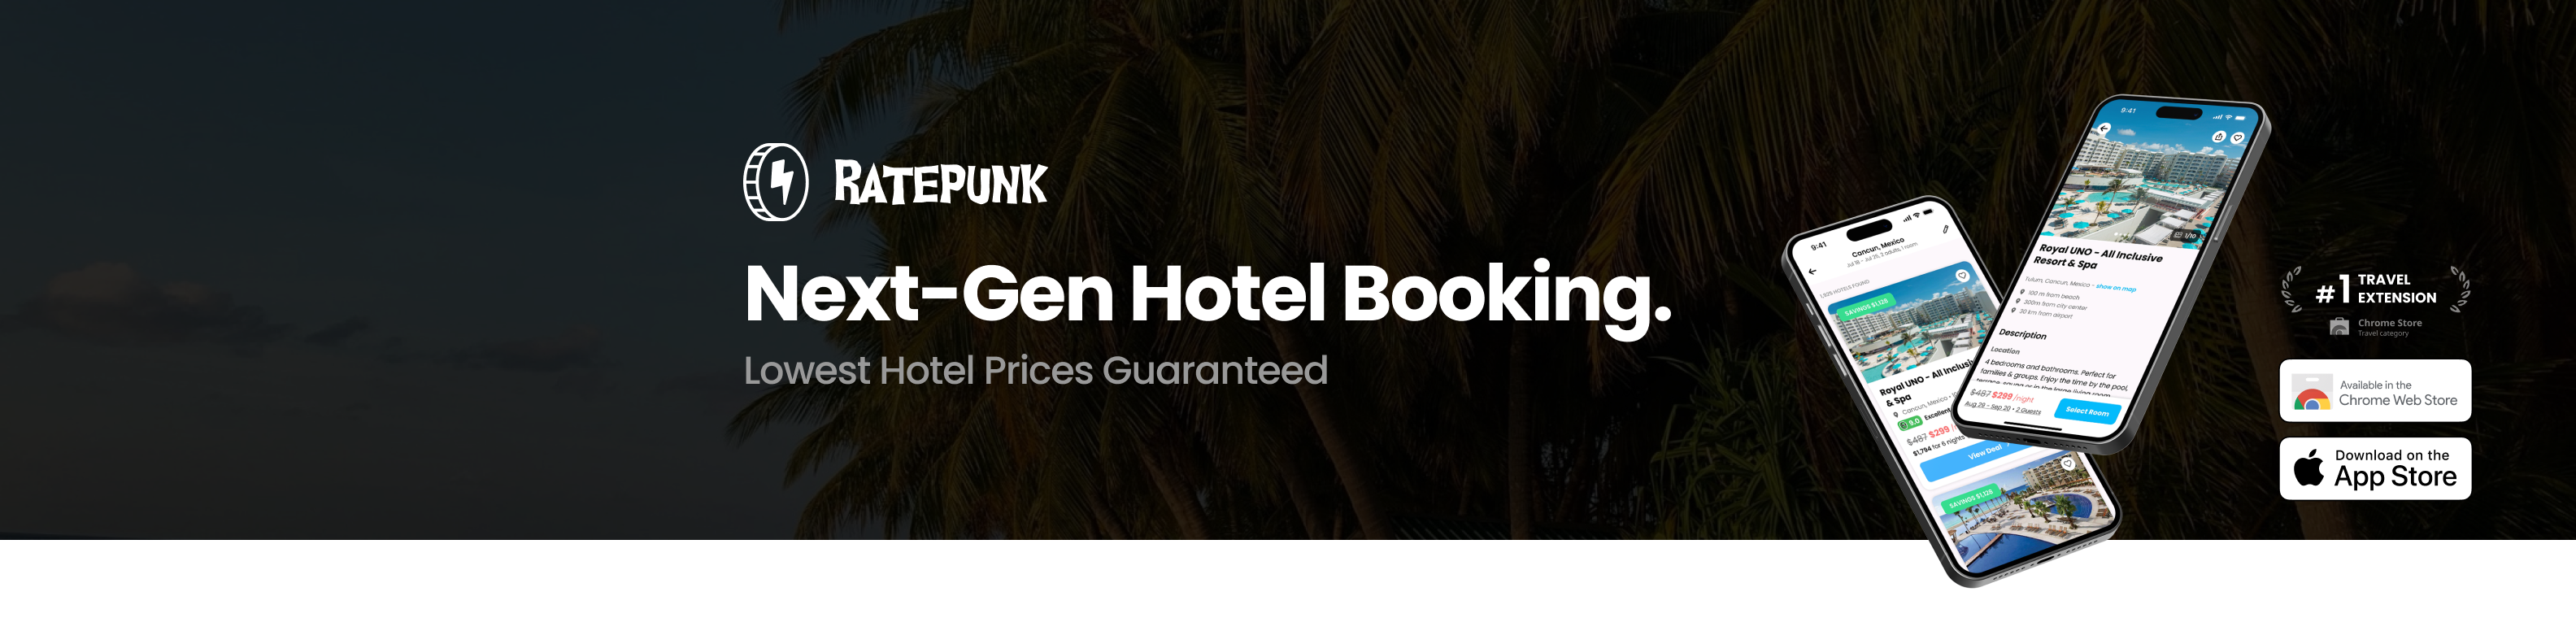 ratepunk next gen hotel booking platform